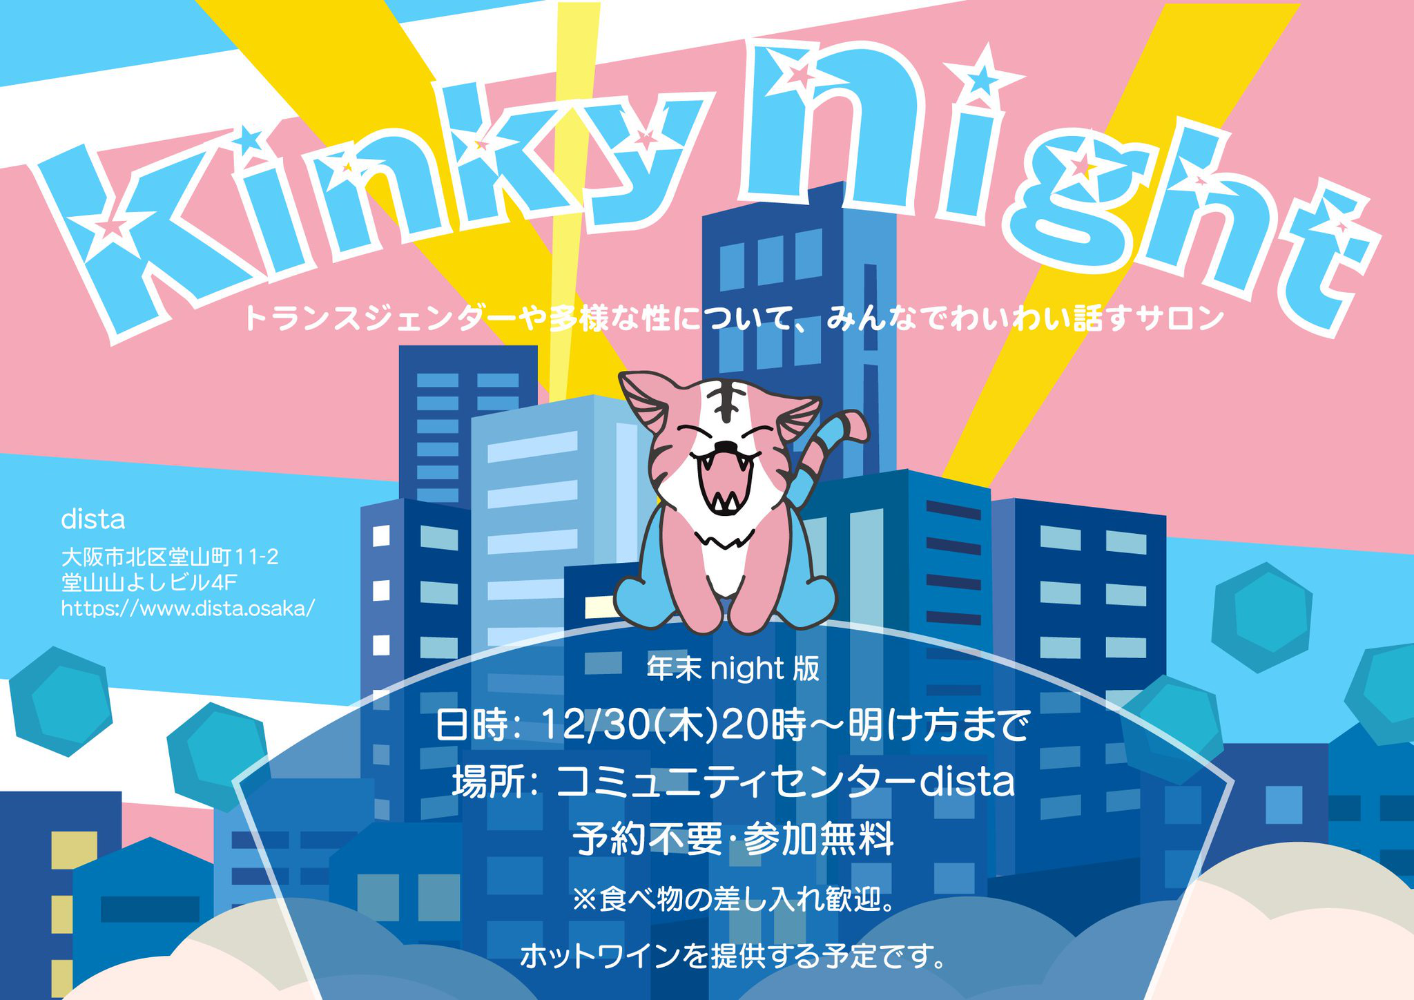 kinky night　※当イベントのみのオープンです